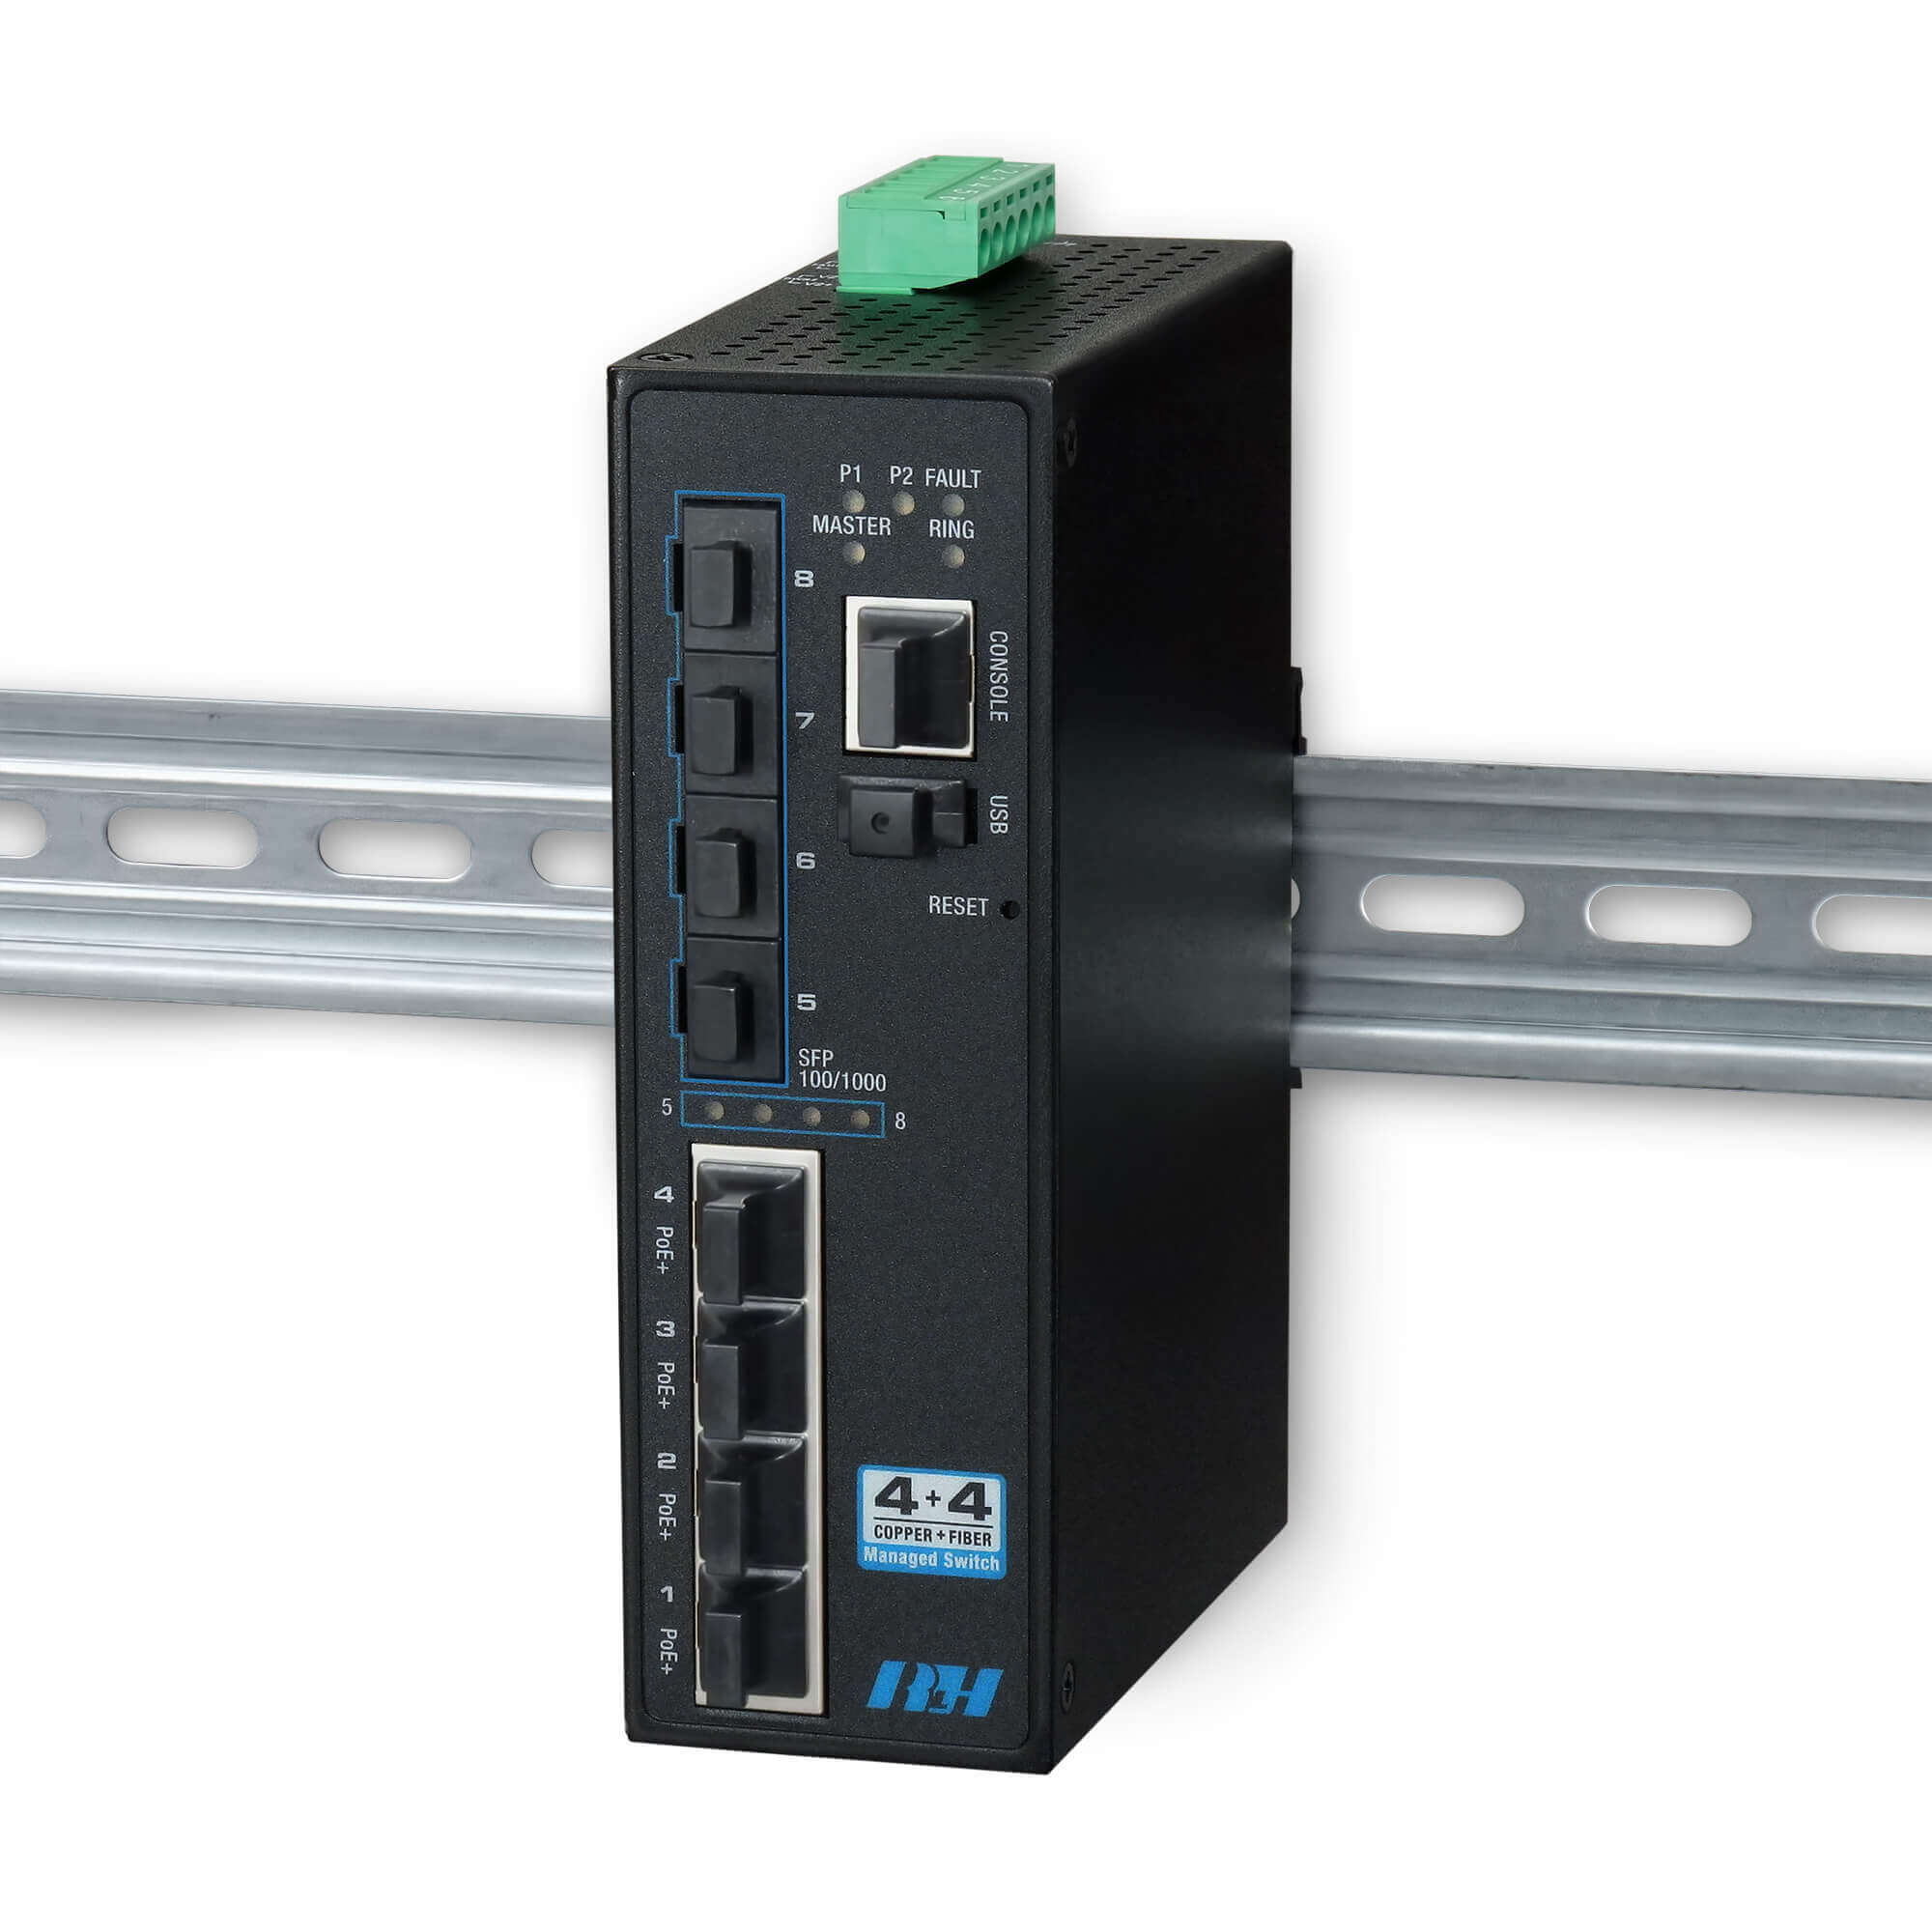 PoE Switch 4 Port + 2 Uplink (RJ45) - Borer Fingerprint Access Control